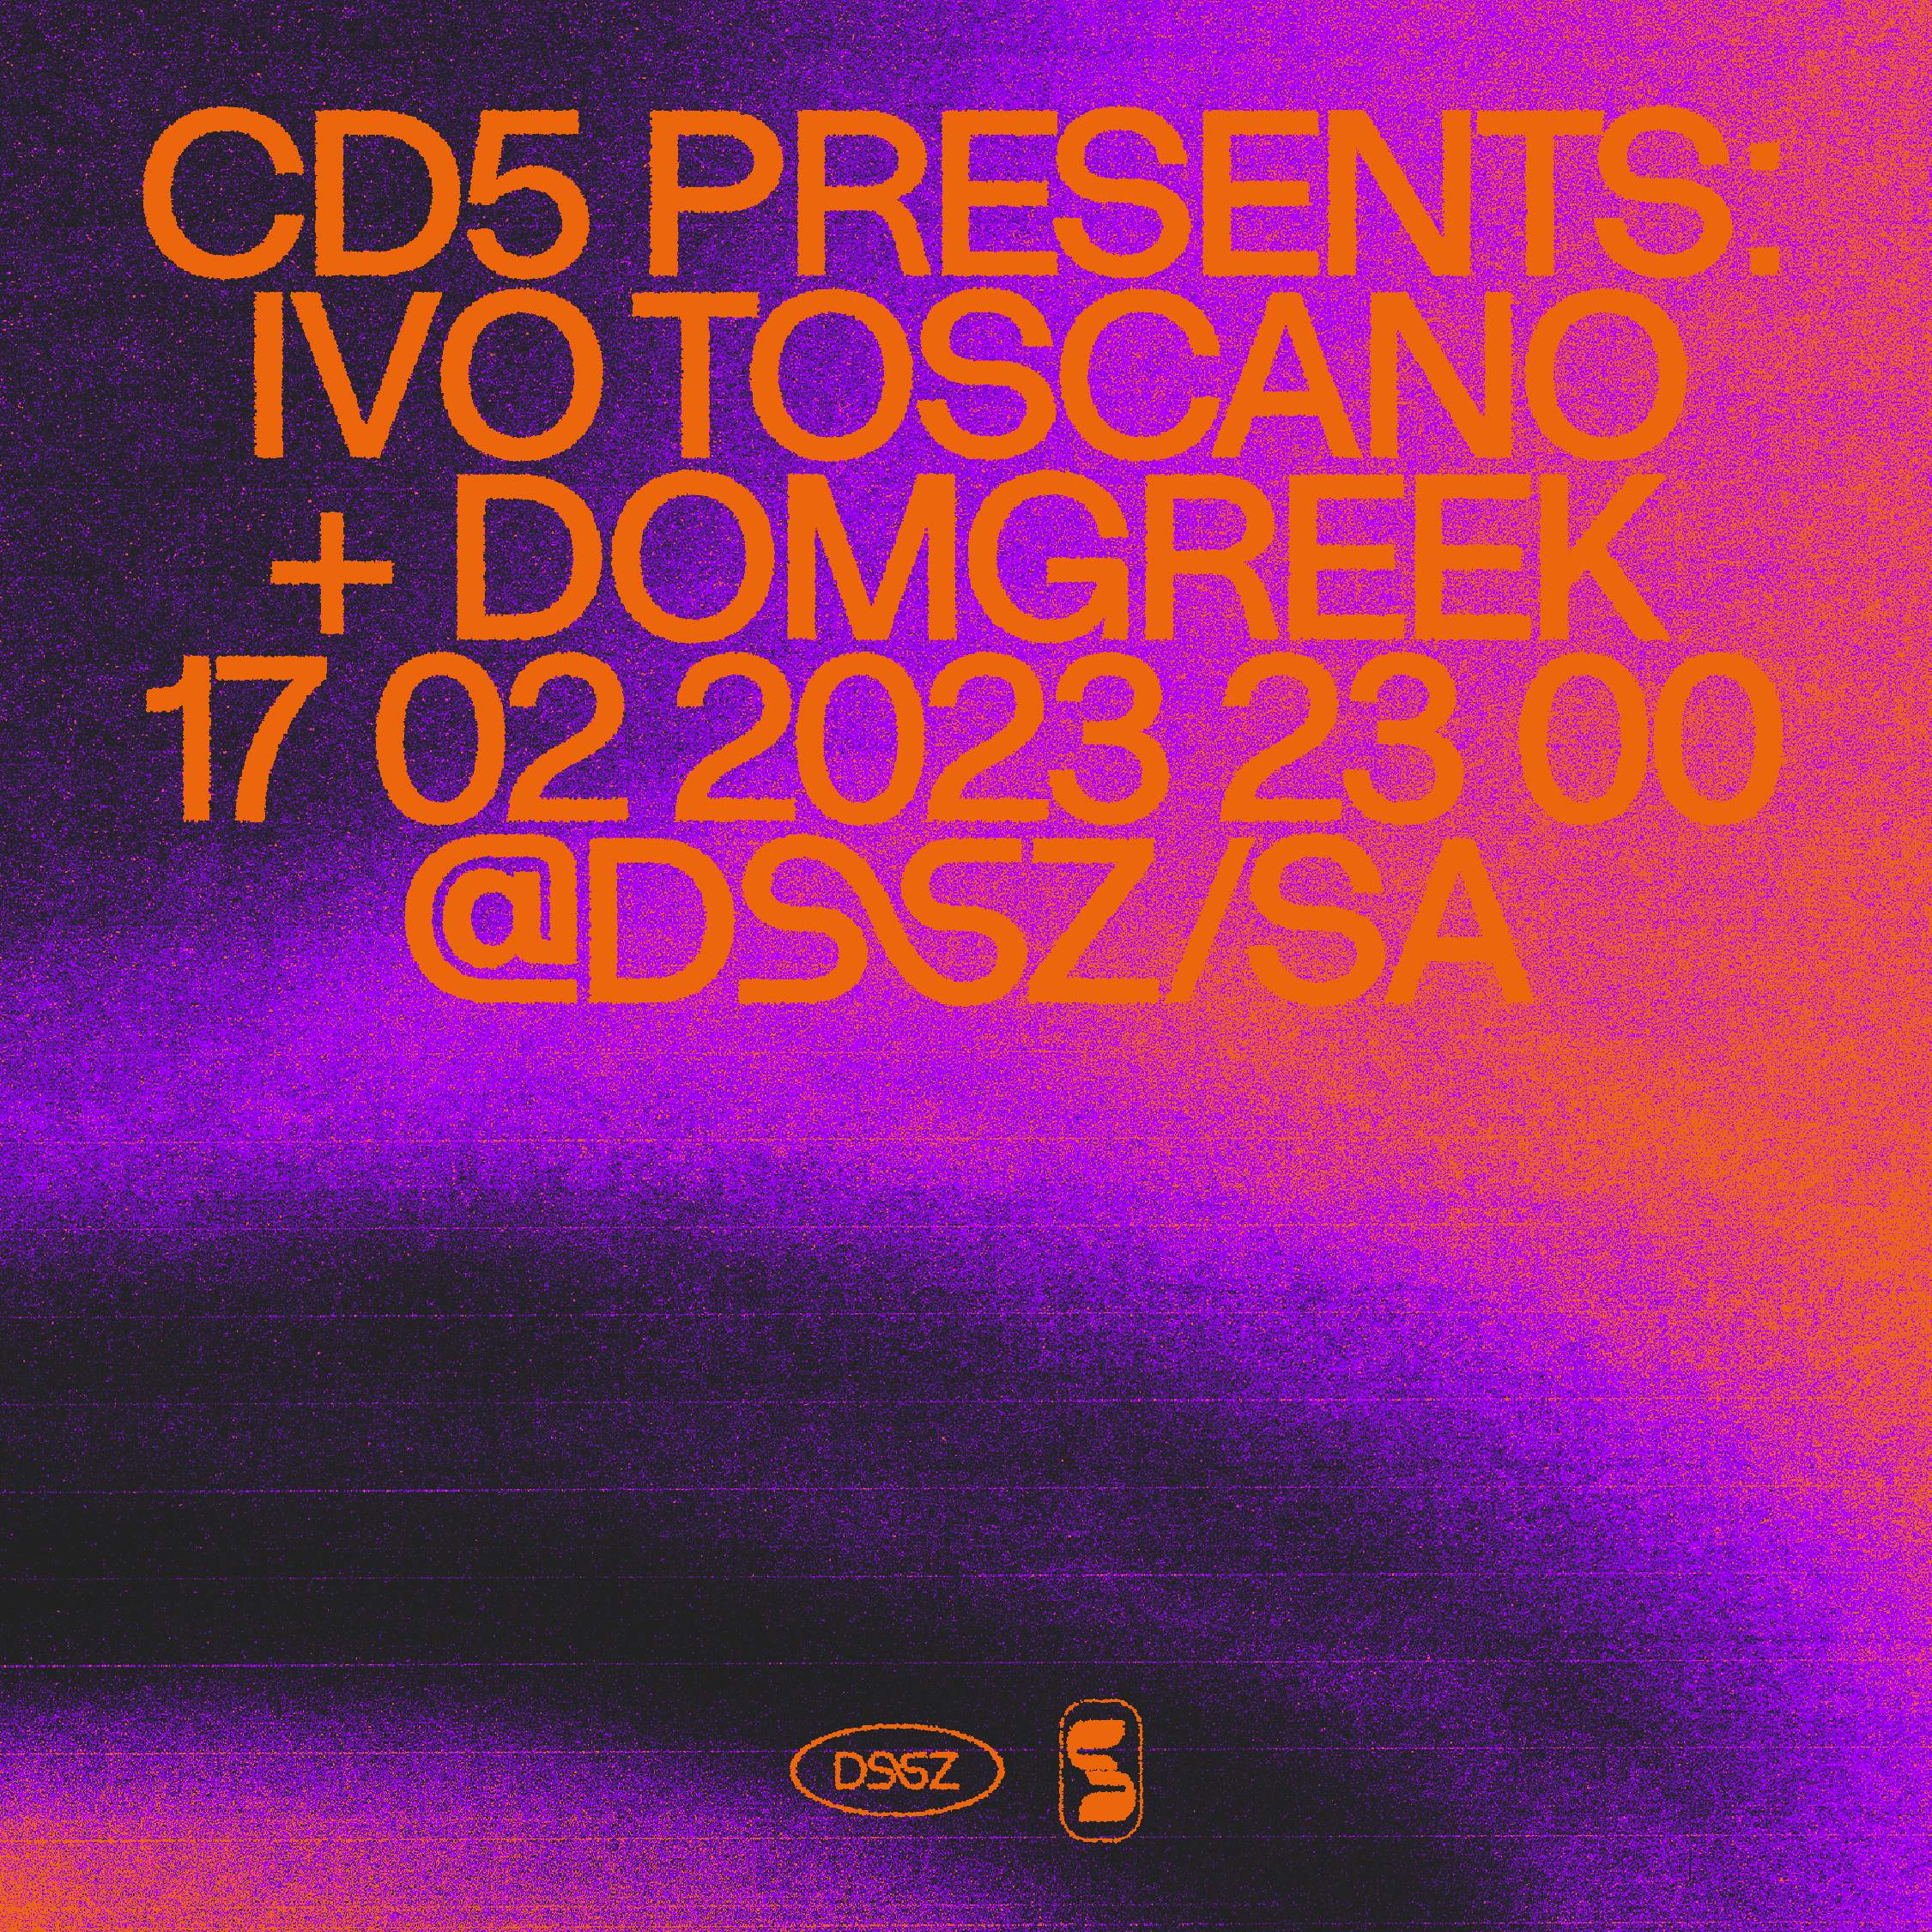 CD5 presents: Ivo Toscano + Domgreek - Página frontal